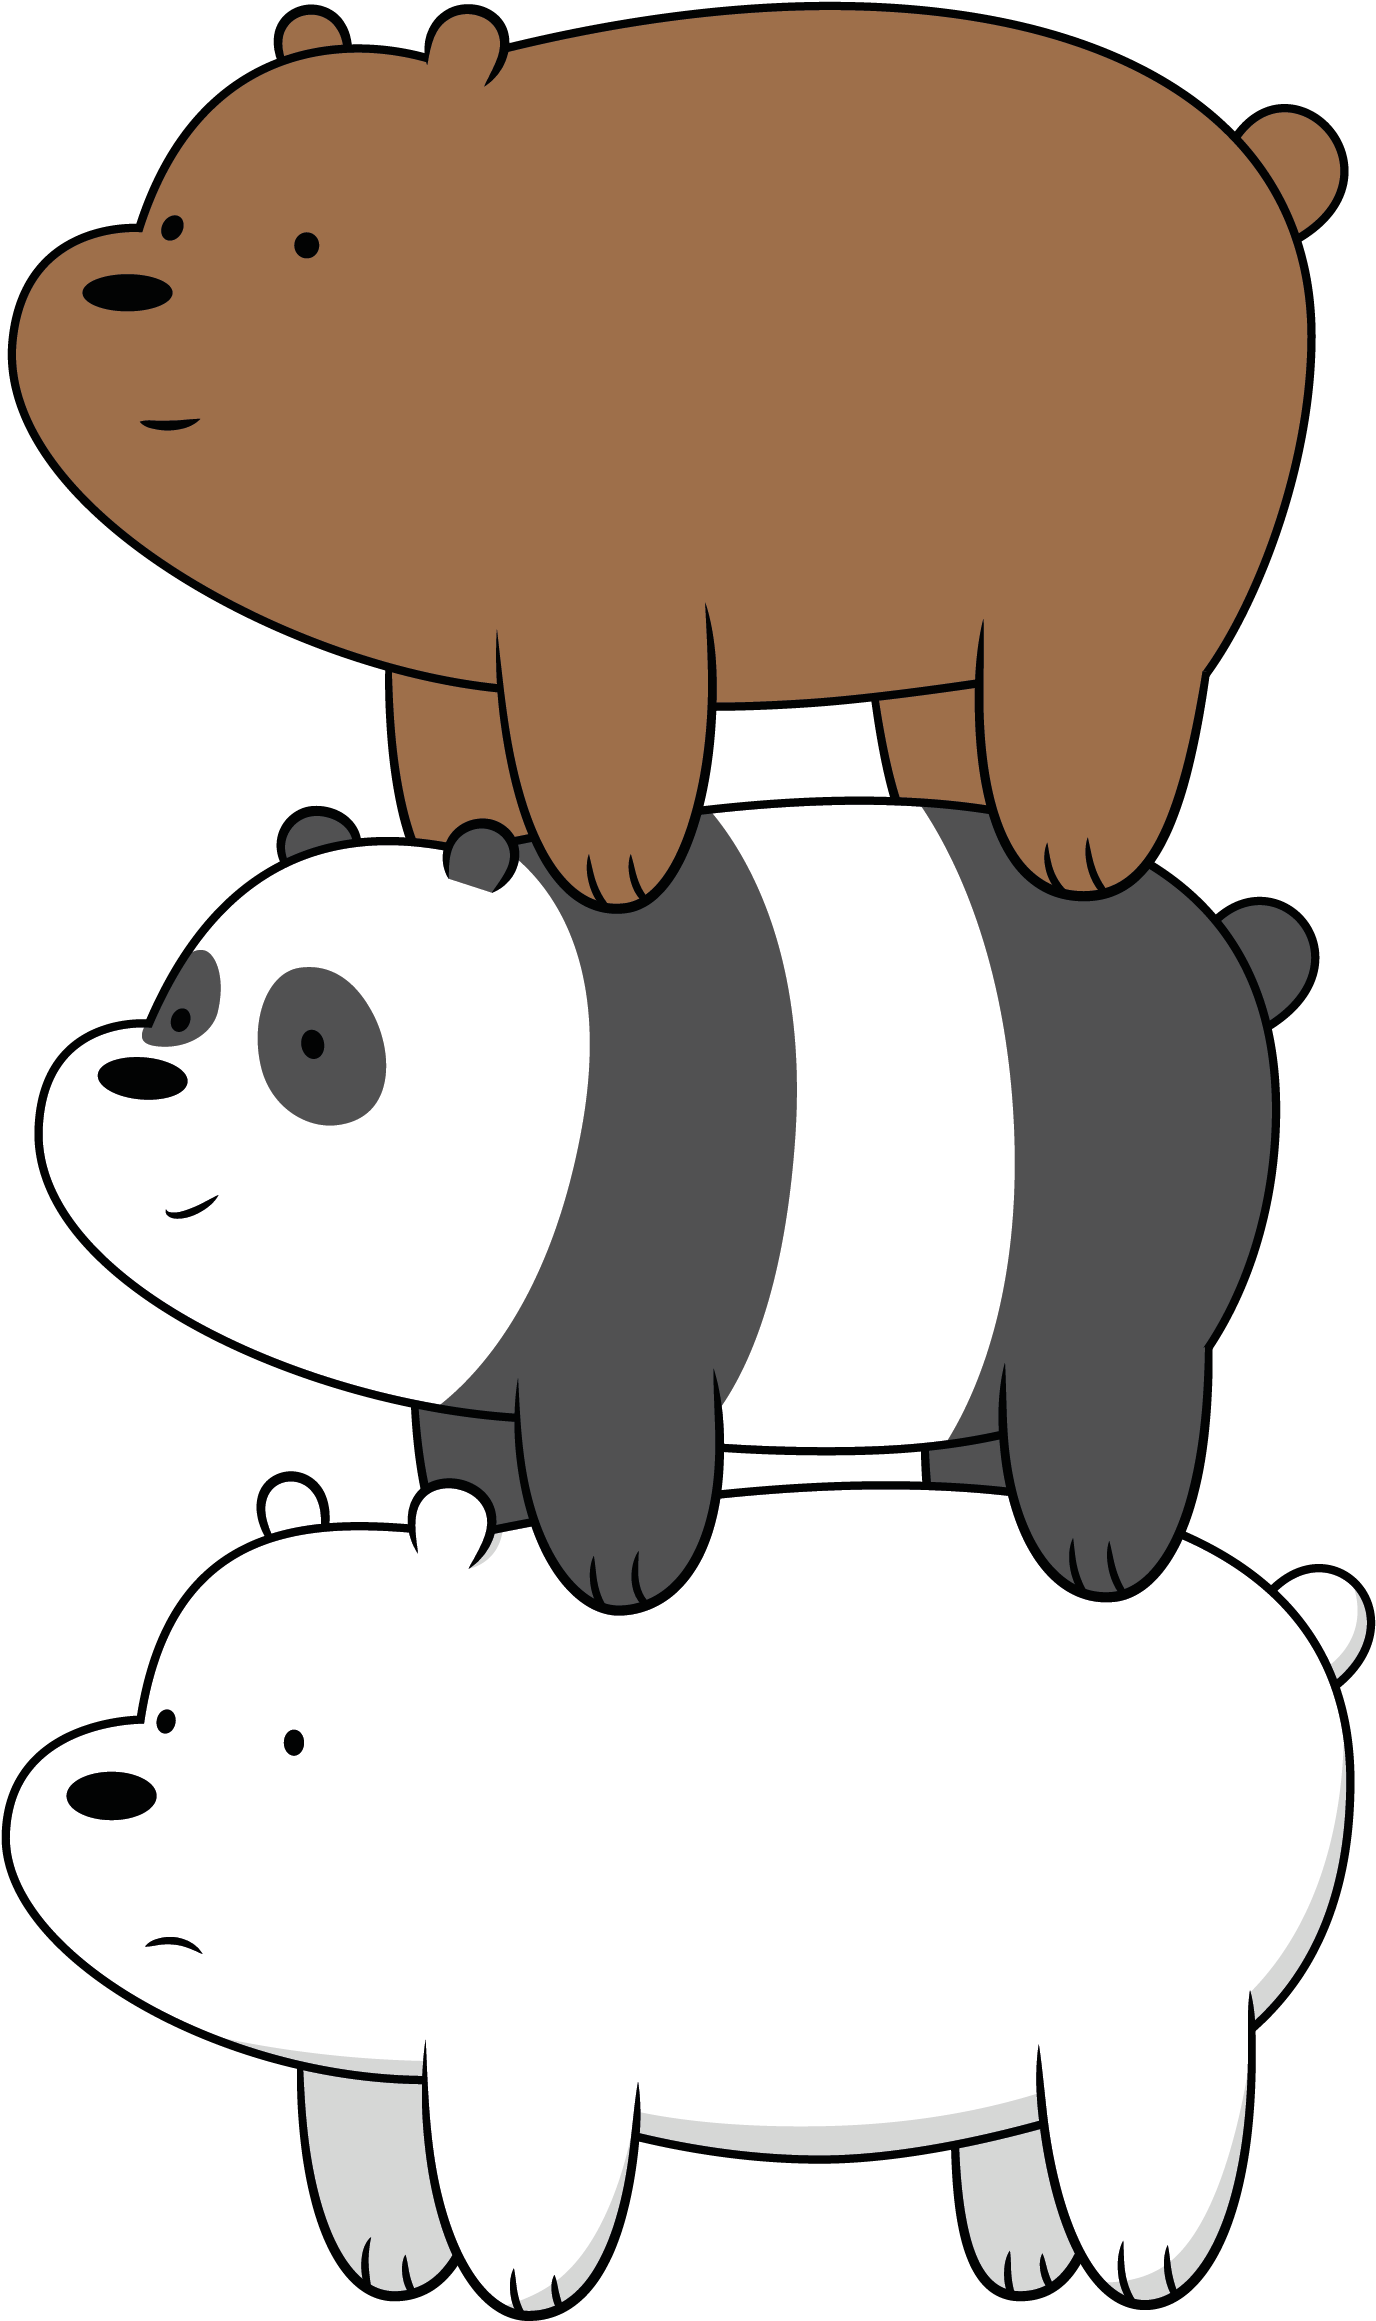 Bear Giant Panda Cartoon Network Chloe Park Animation - Bear Giant Panda Cartoon Network Chloe Park Animation (1637x2694)